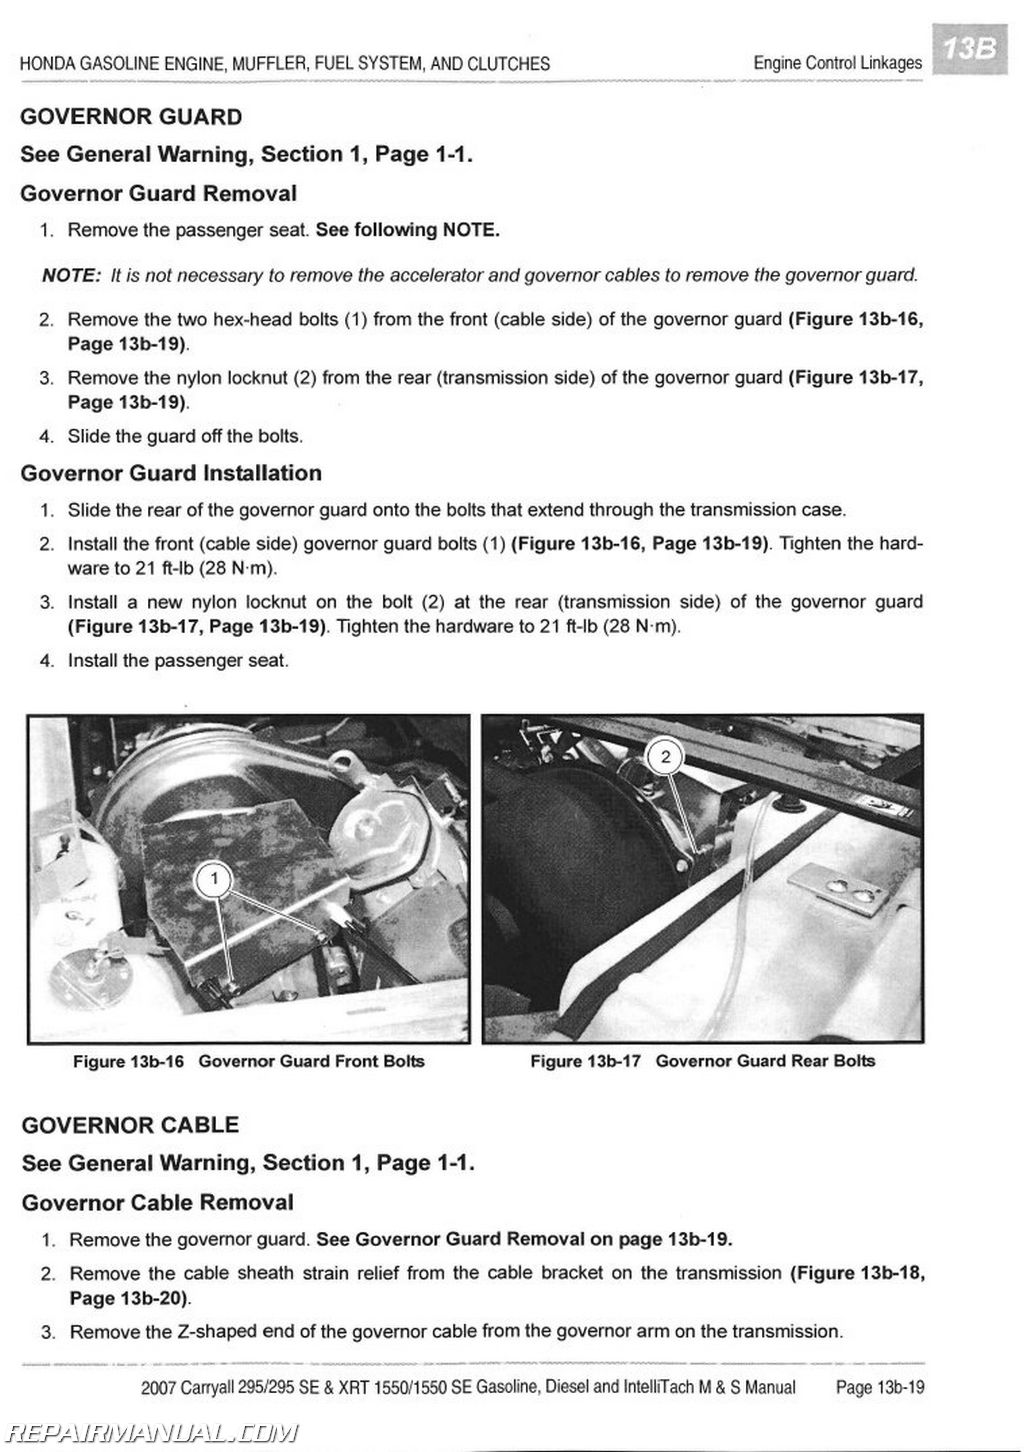 2007 Club Car Carryall Service Manual 295, 295SE – XRT ...